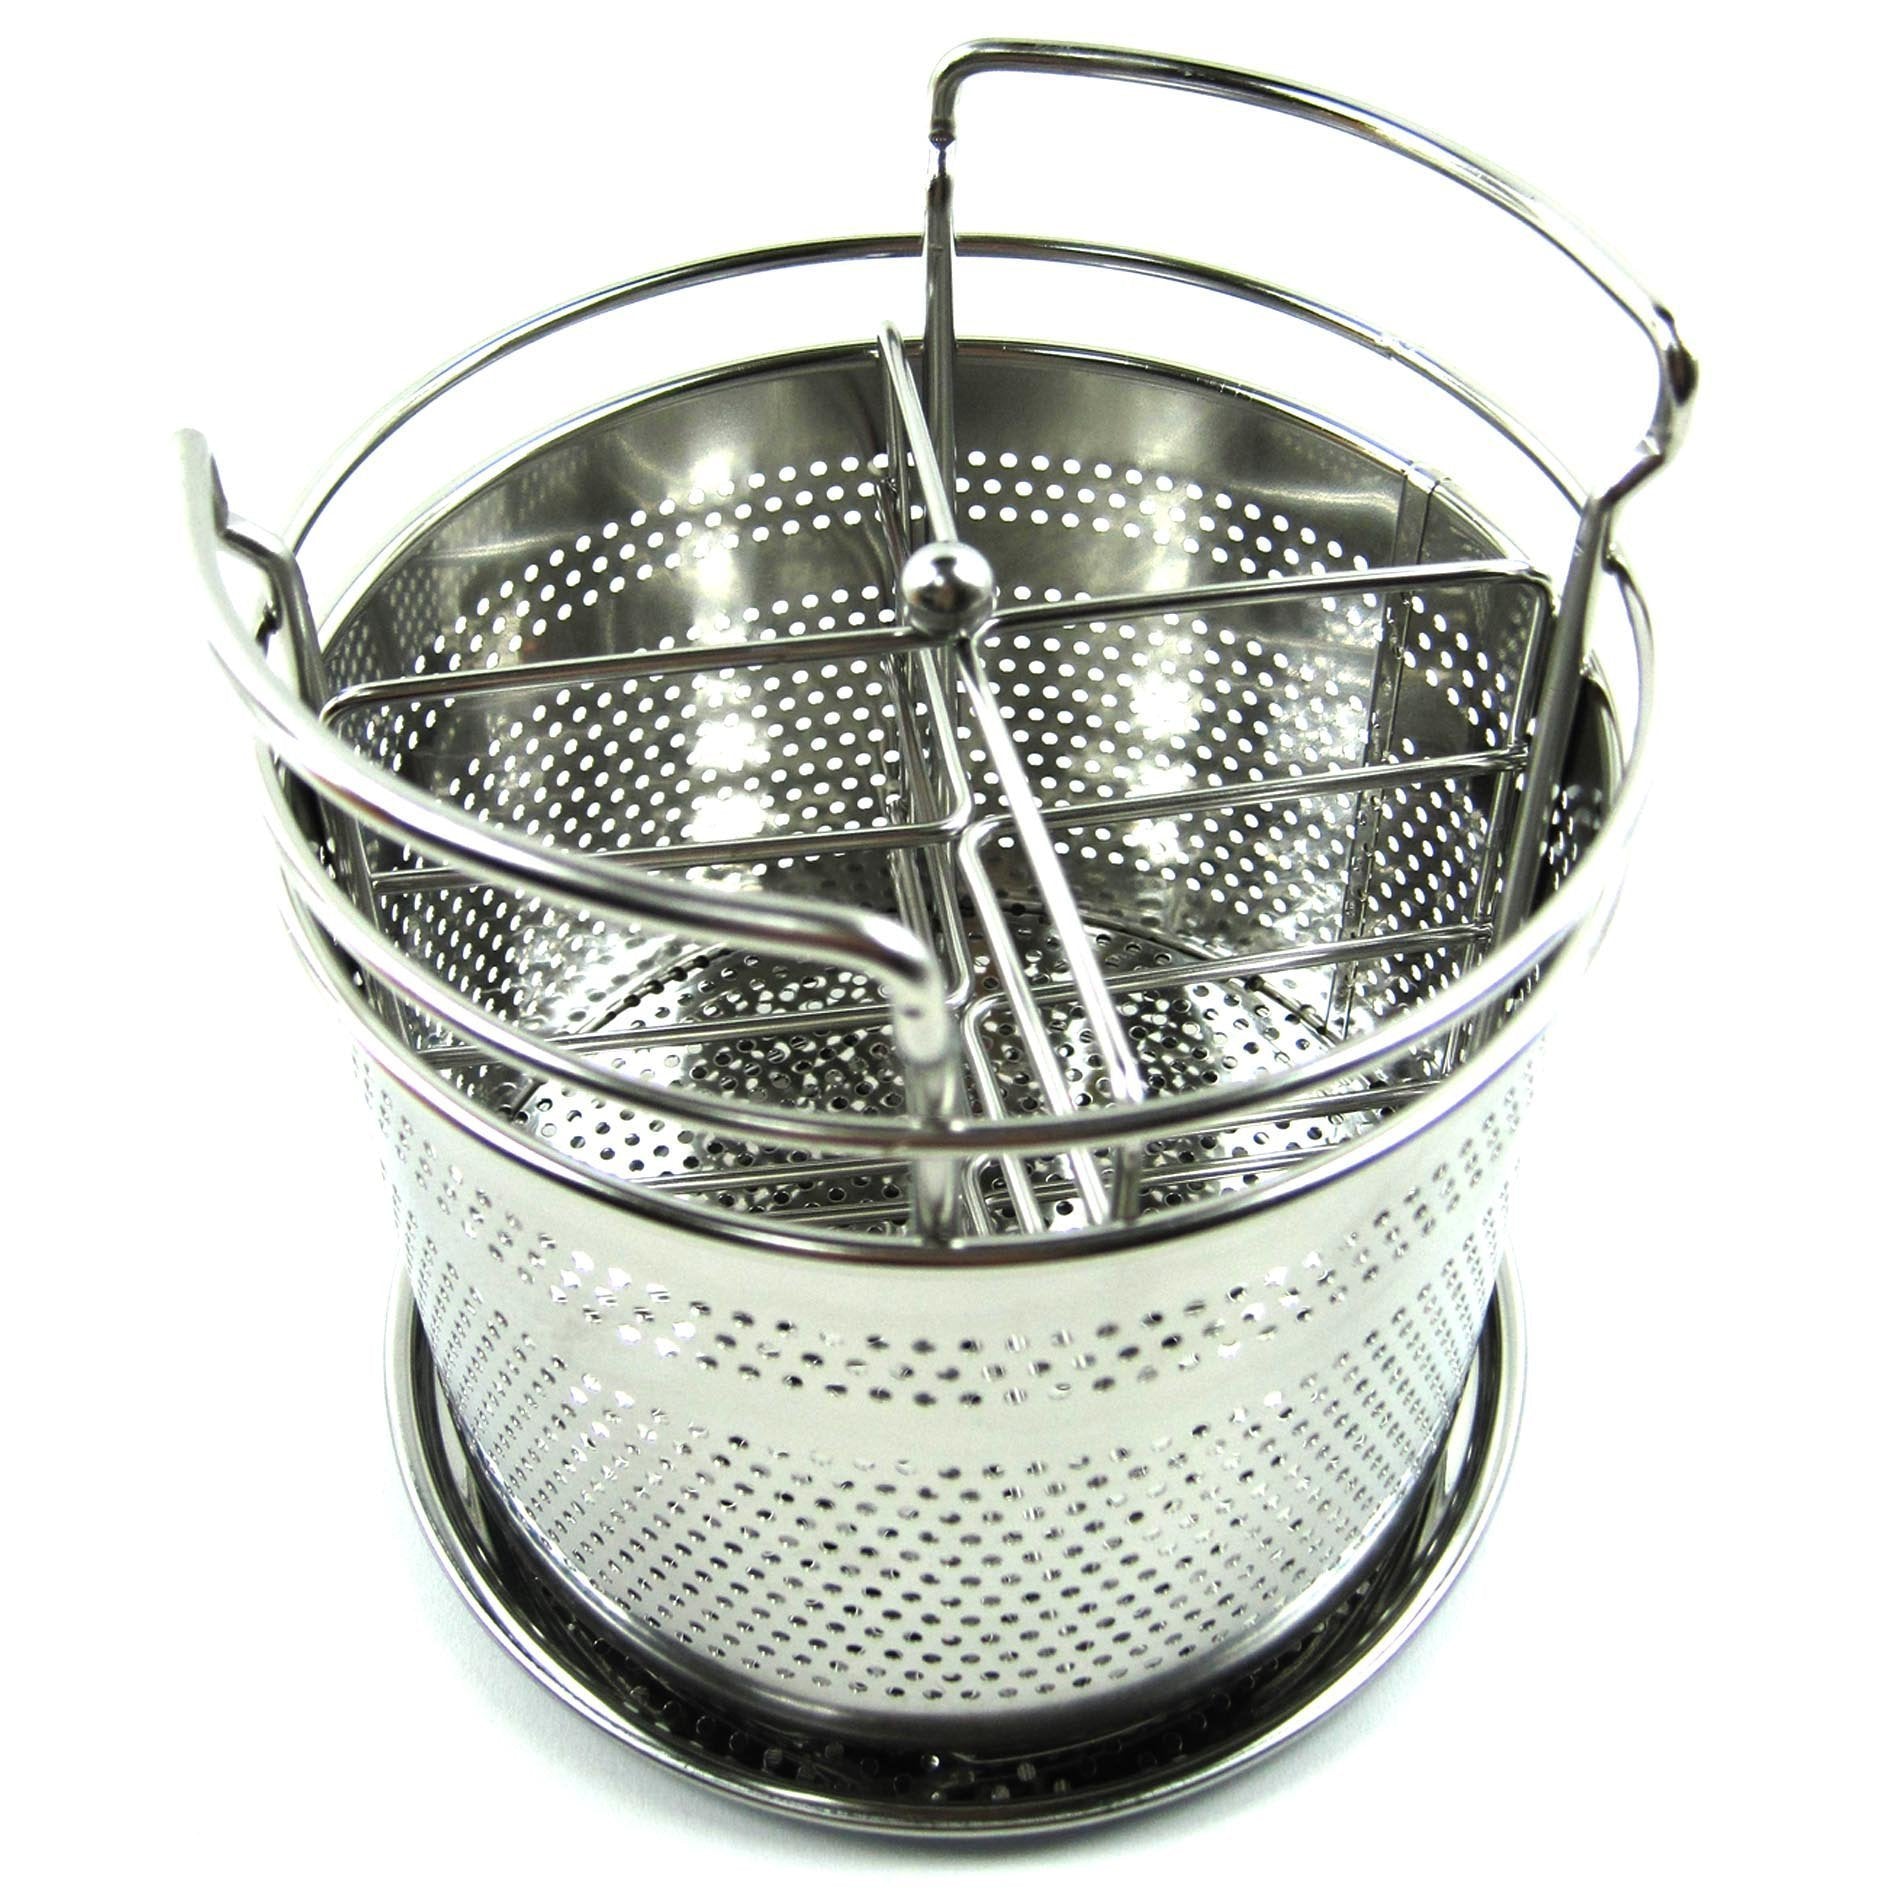 Explore hanil circle stainless spoon holder cutlery organizer utensils storage silver